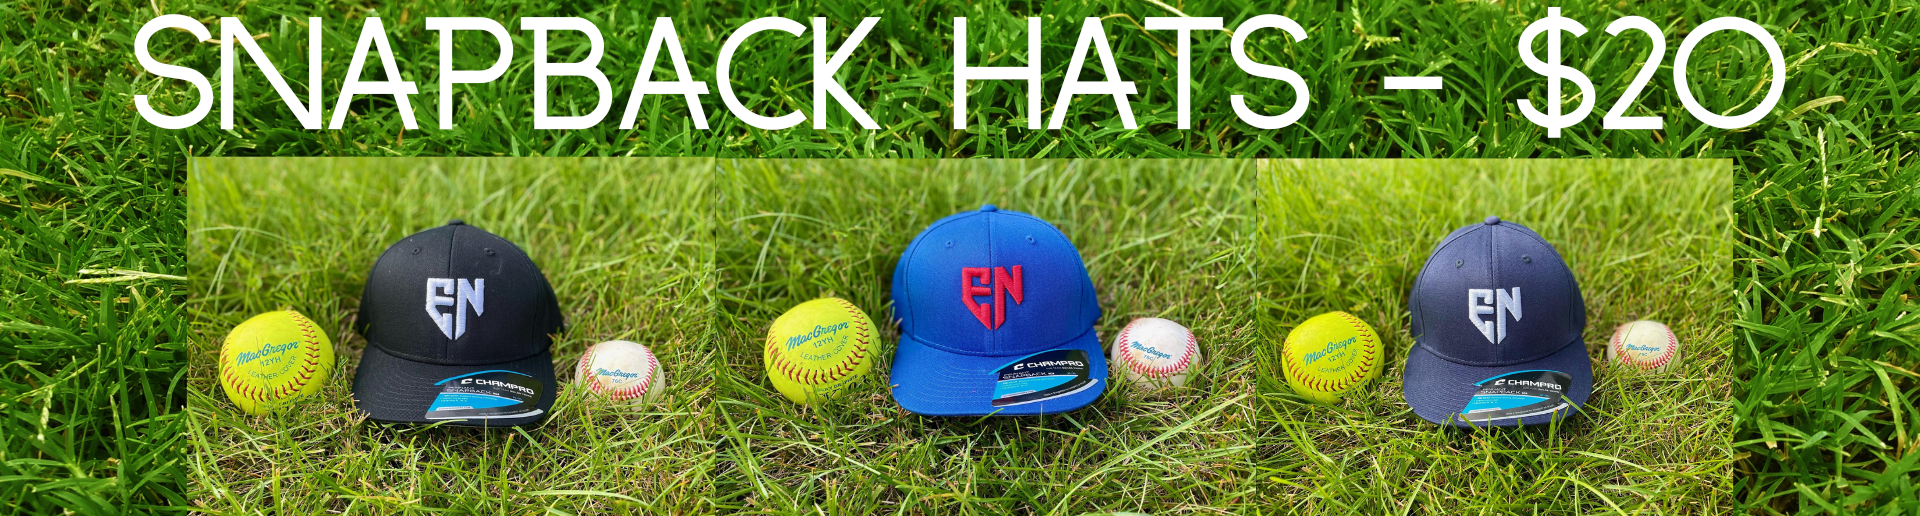 Buy an ENLL Snapback Hat!